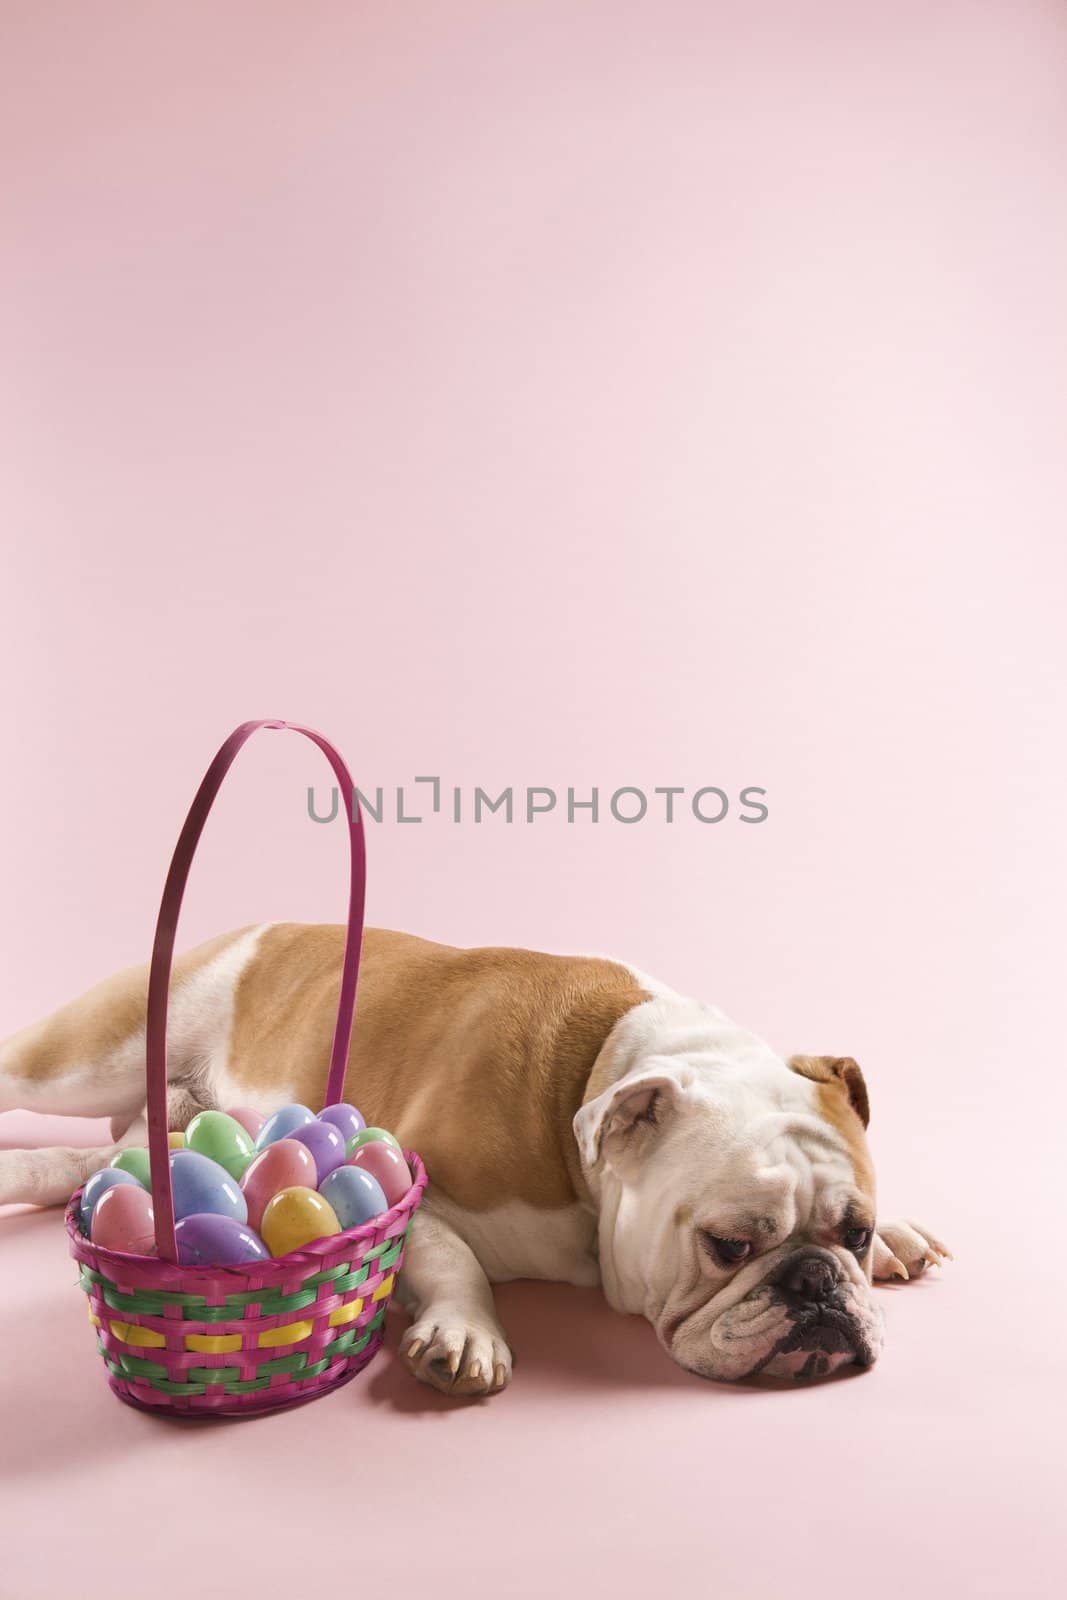 Sleeping English Bulldog next to Easter basket on pink background.